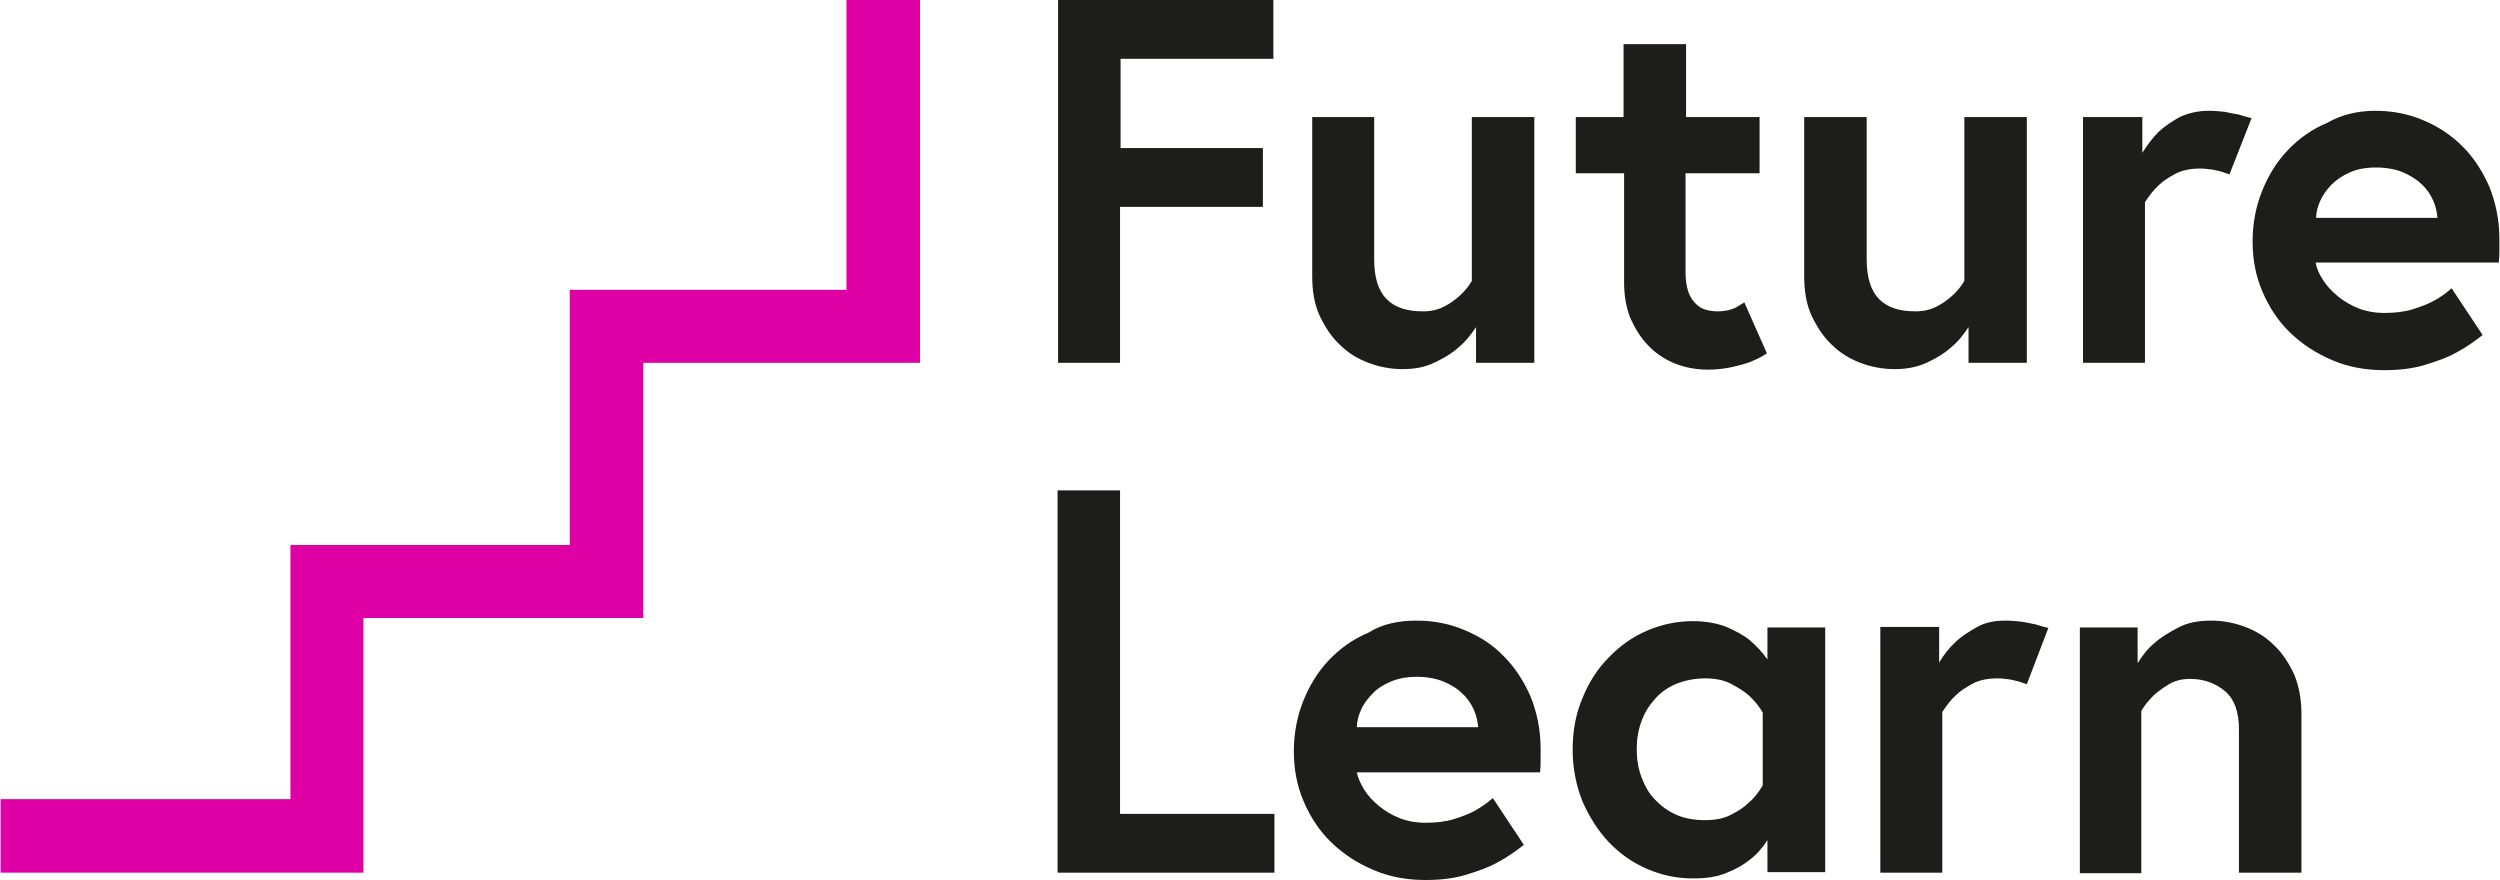 software developer online training future learn logo